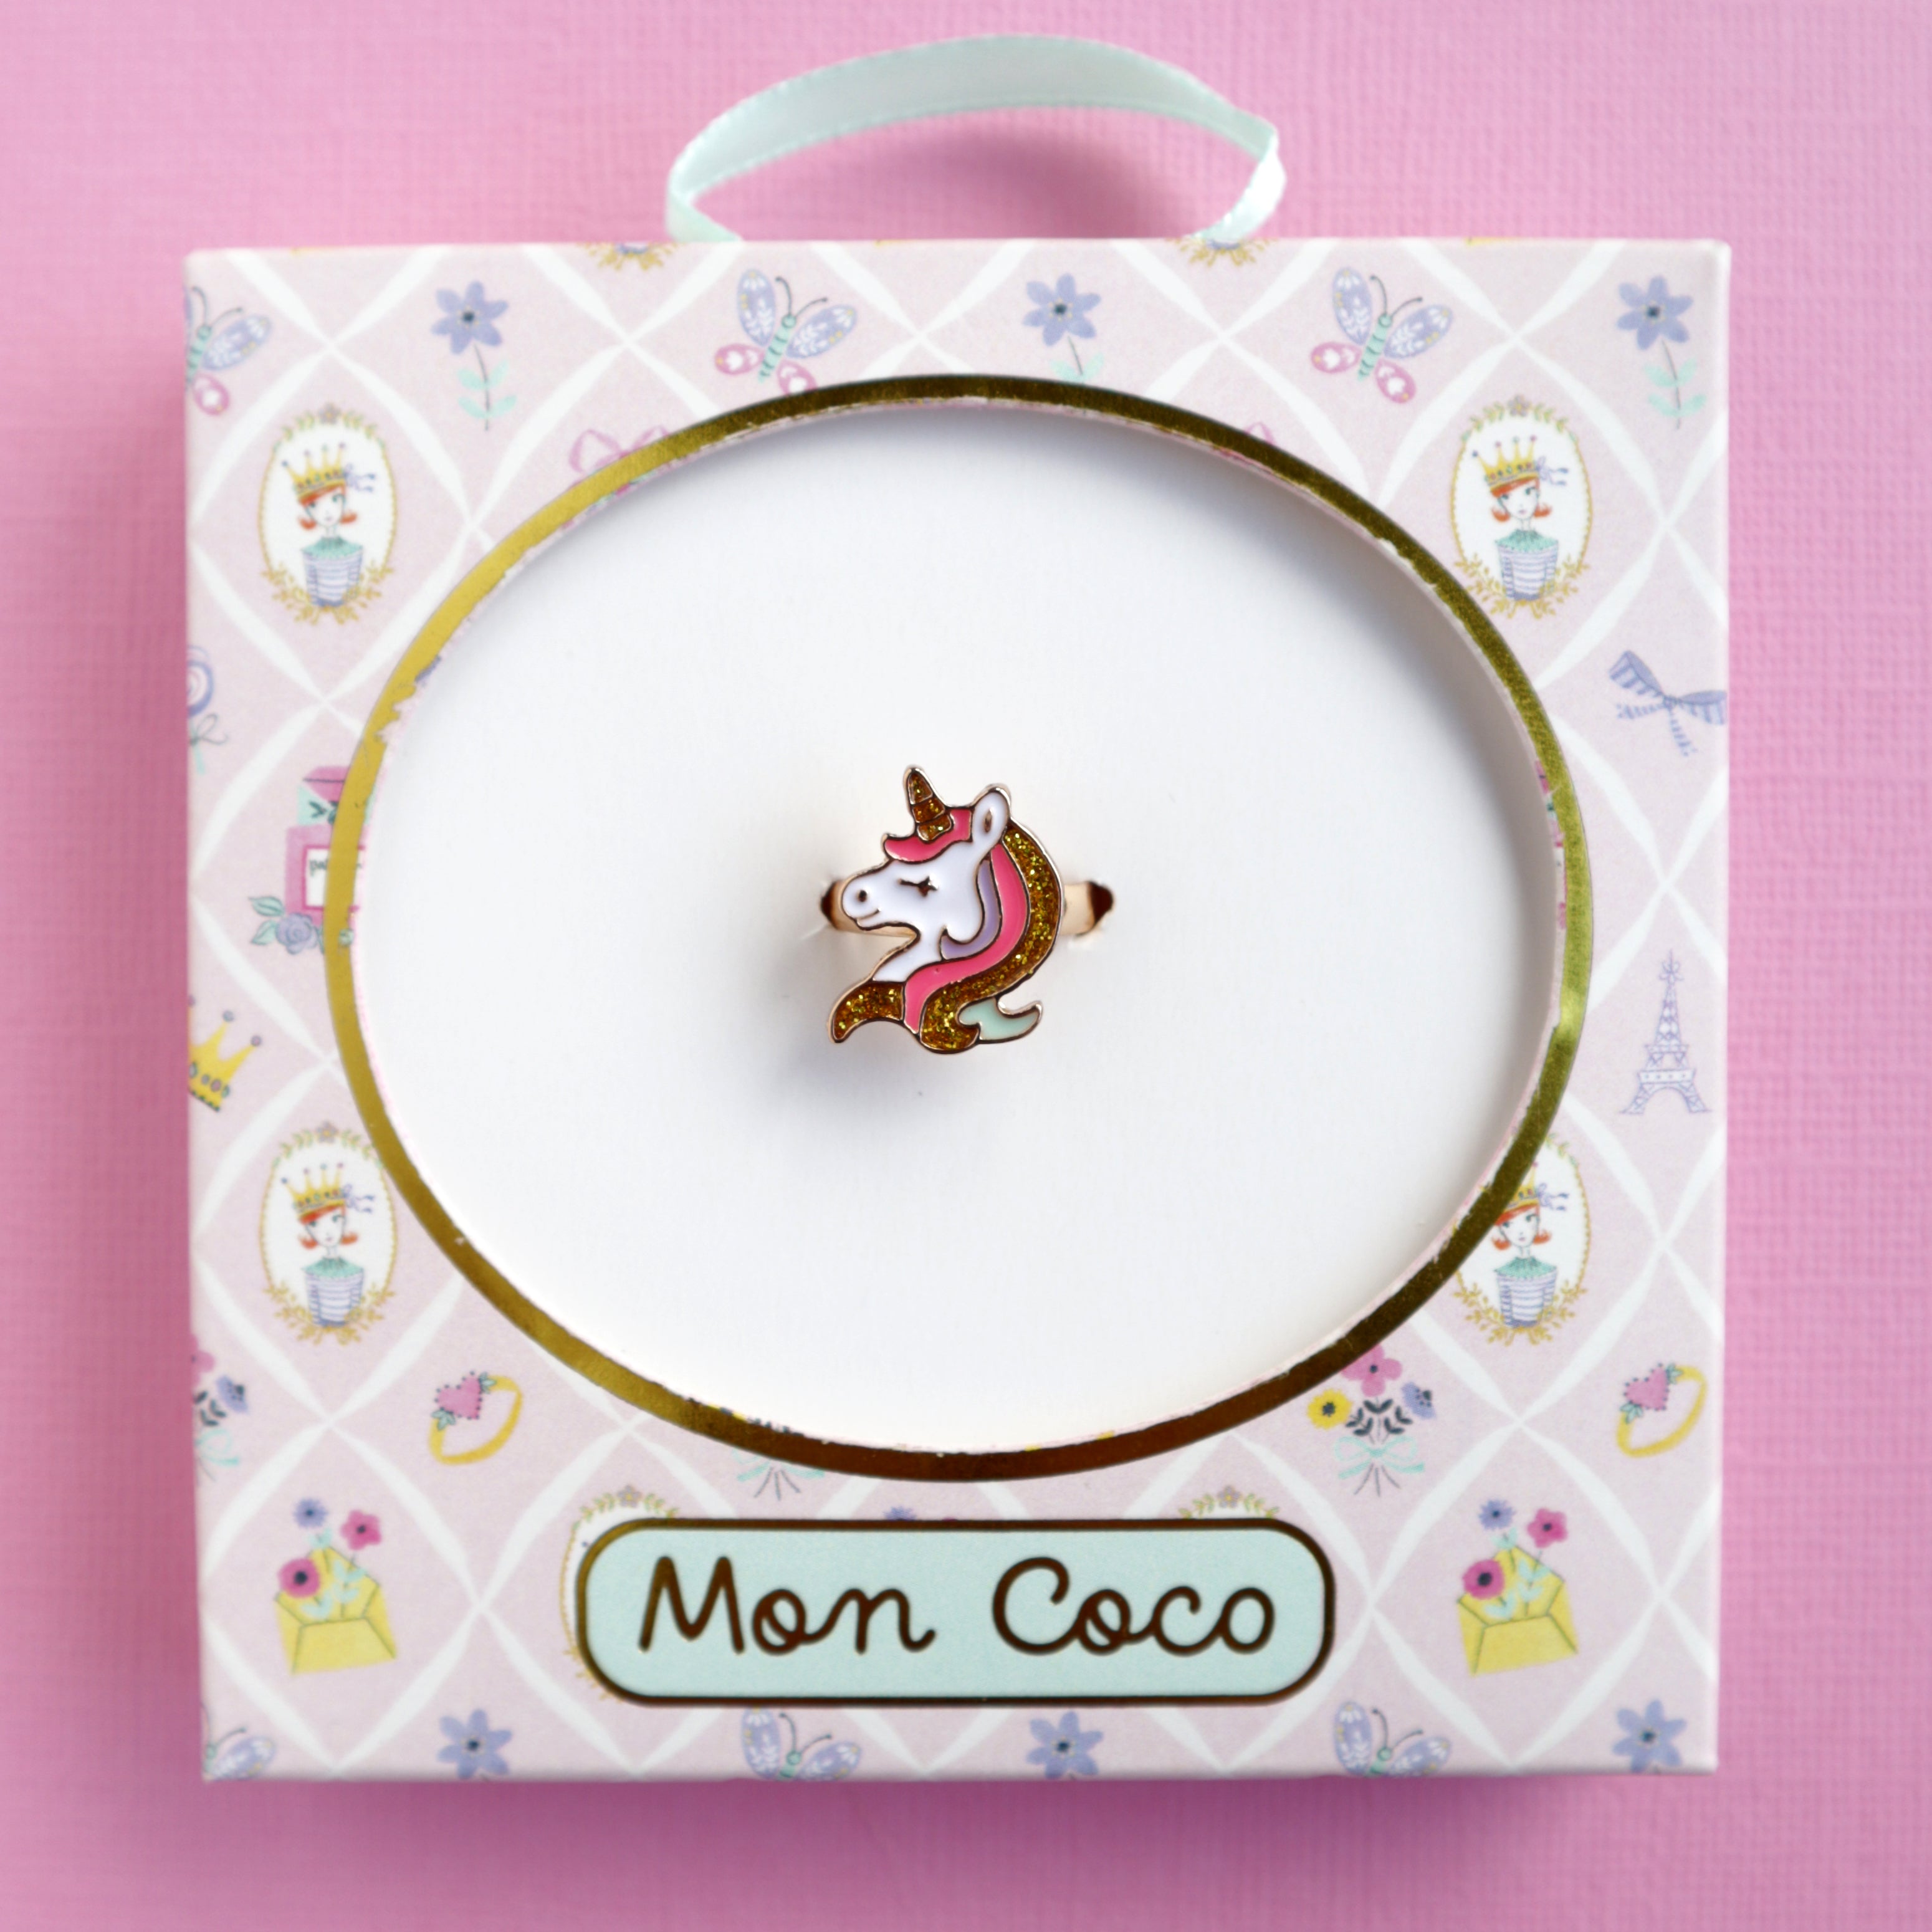 Mon Coco | Adjustable Ring - Unicorn Shimmer